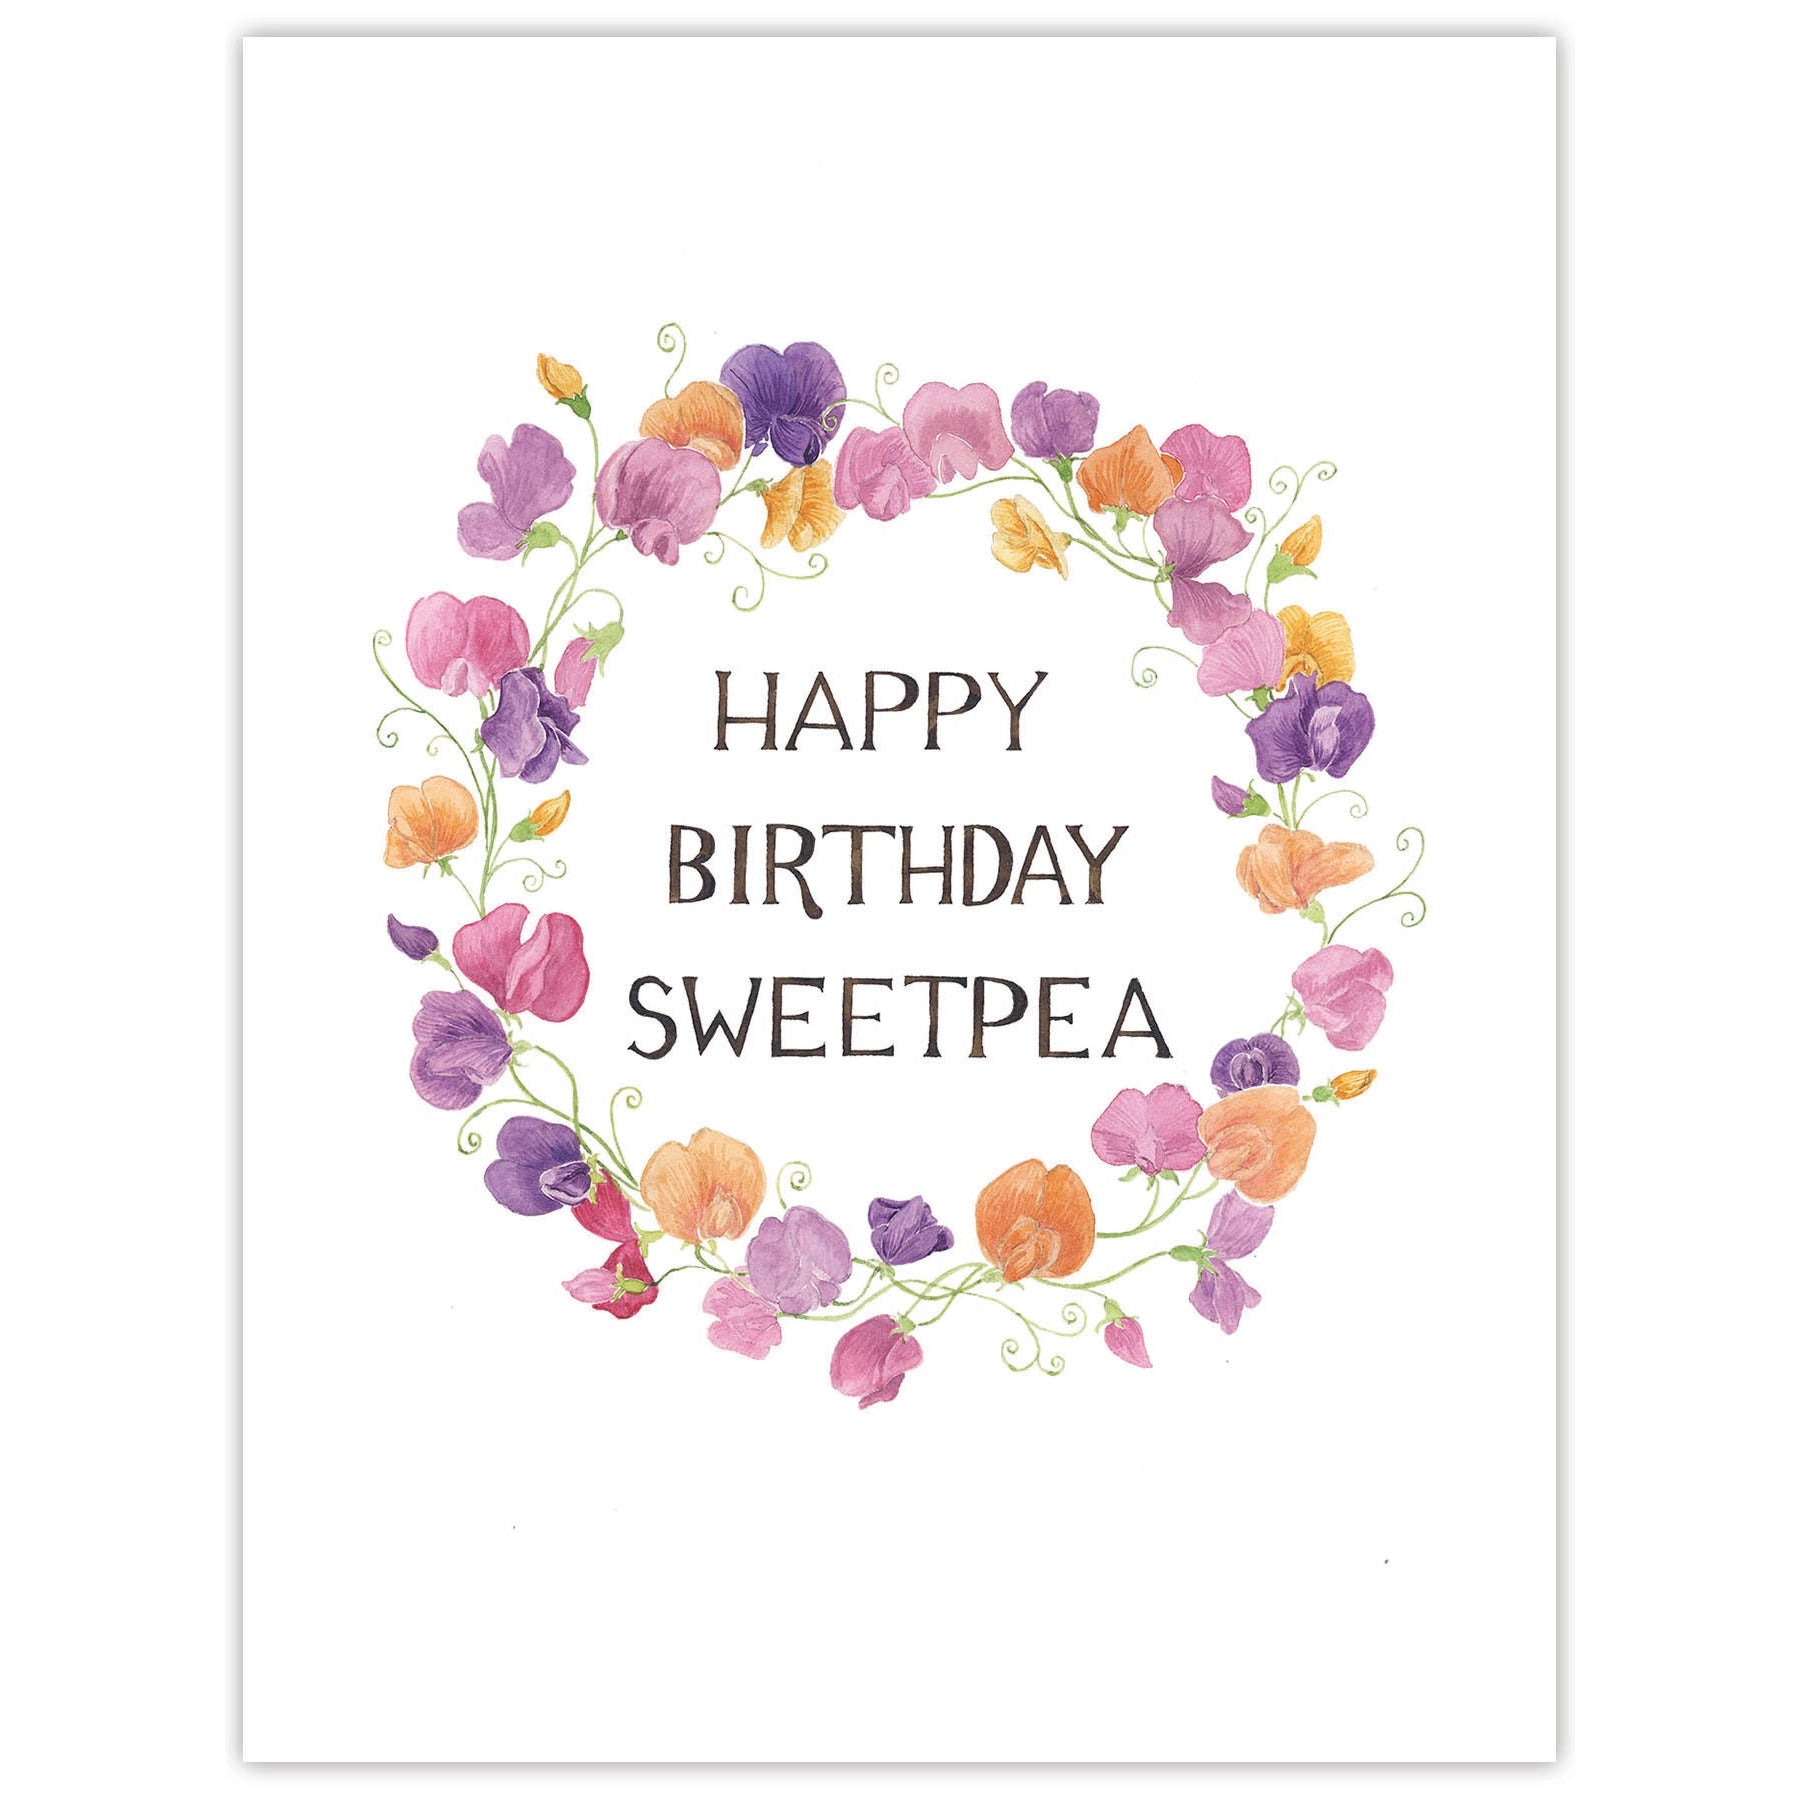 Sweetpea - Birthday Card